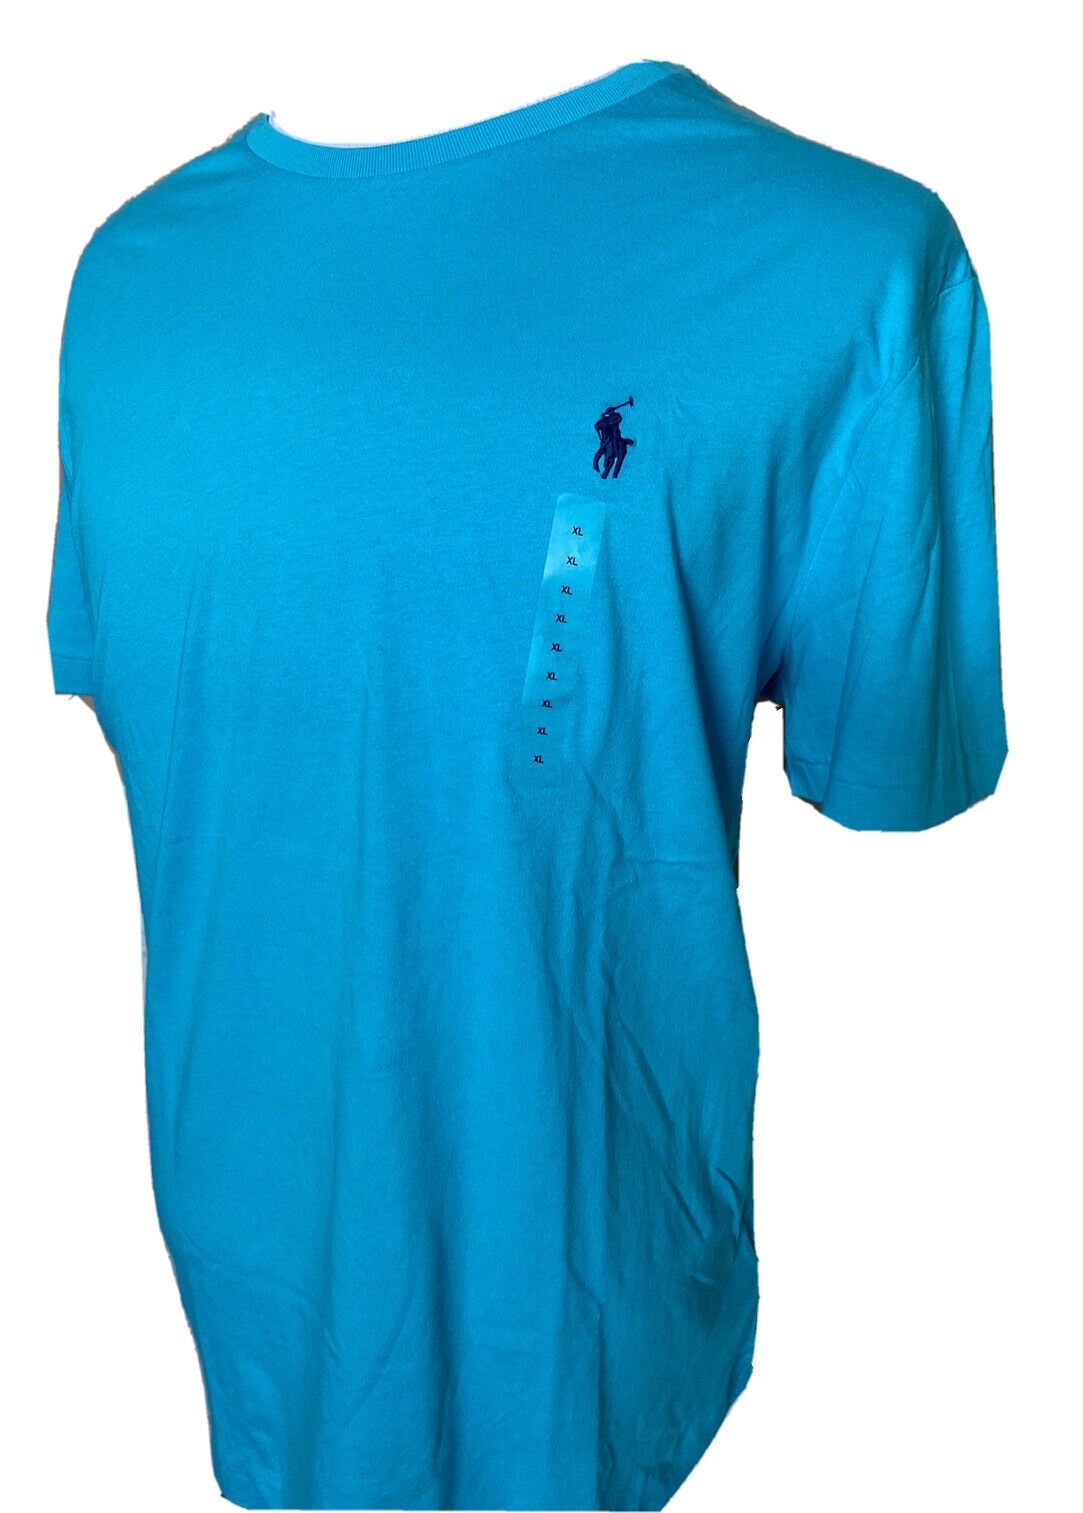 Хлопковая футболка с короткими рукавами NWT Polo Ralph Lauren, синяя, XL 